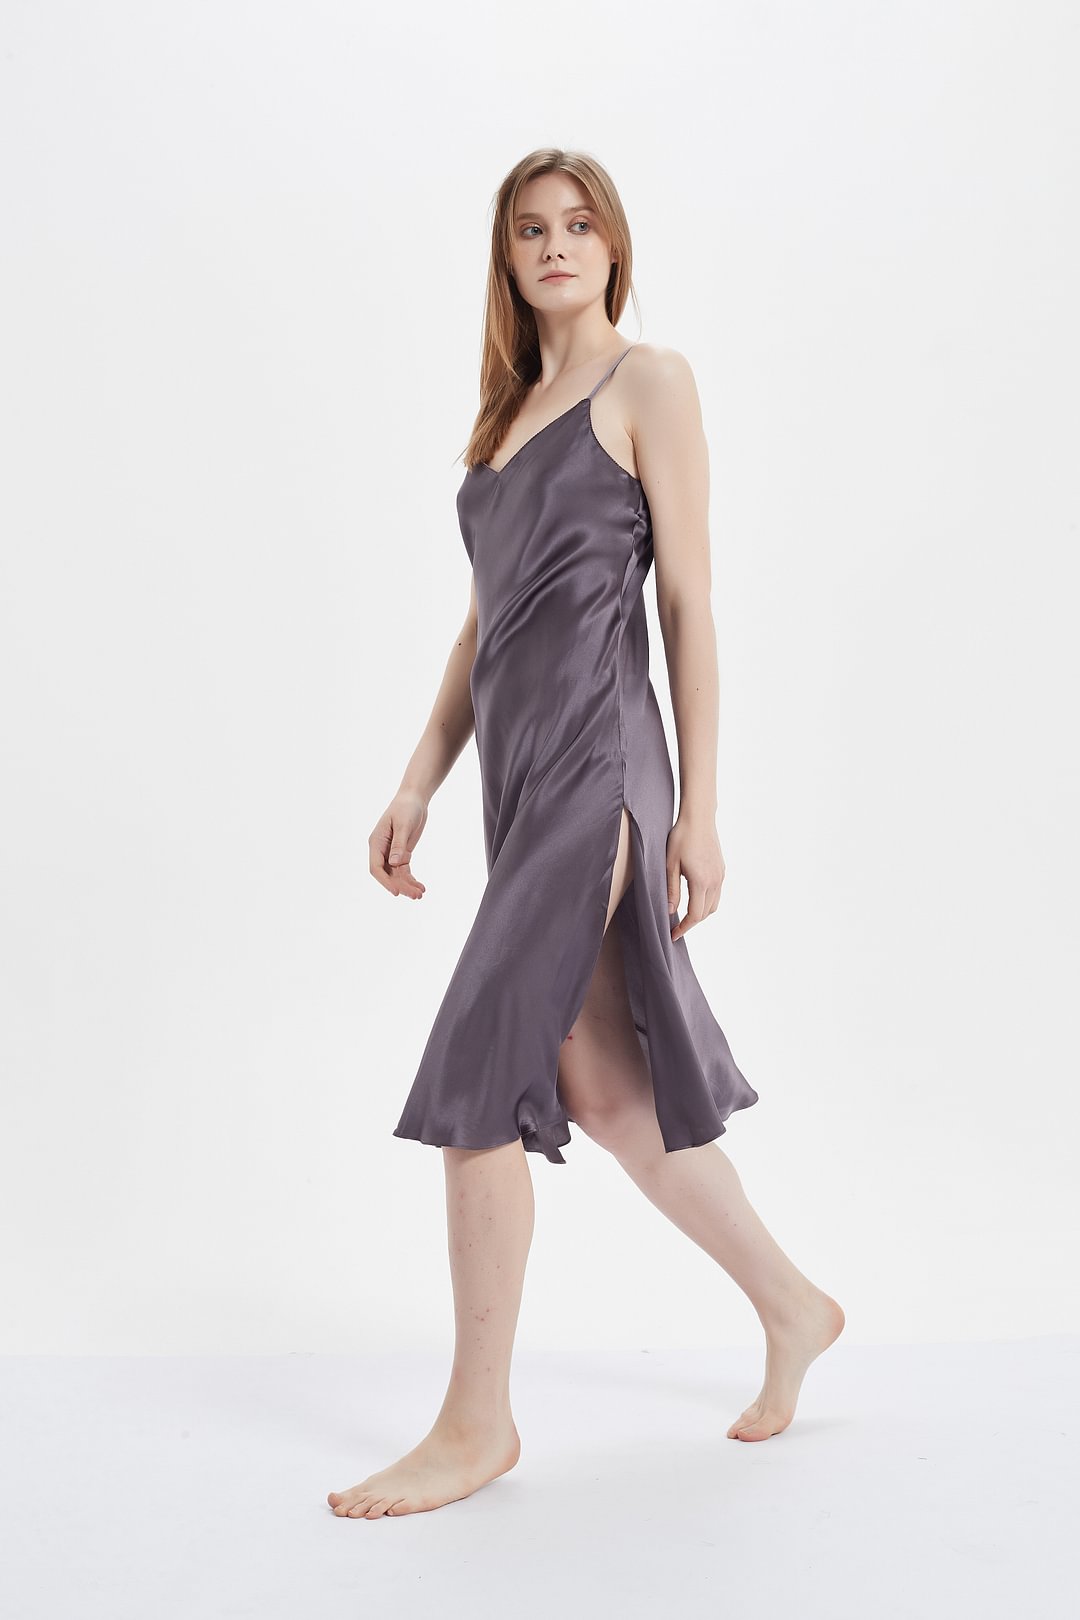 Sexy Backless Side Long Silk Slip Dress Nightgown